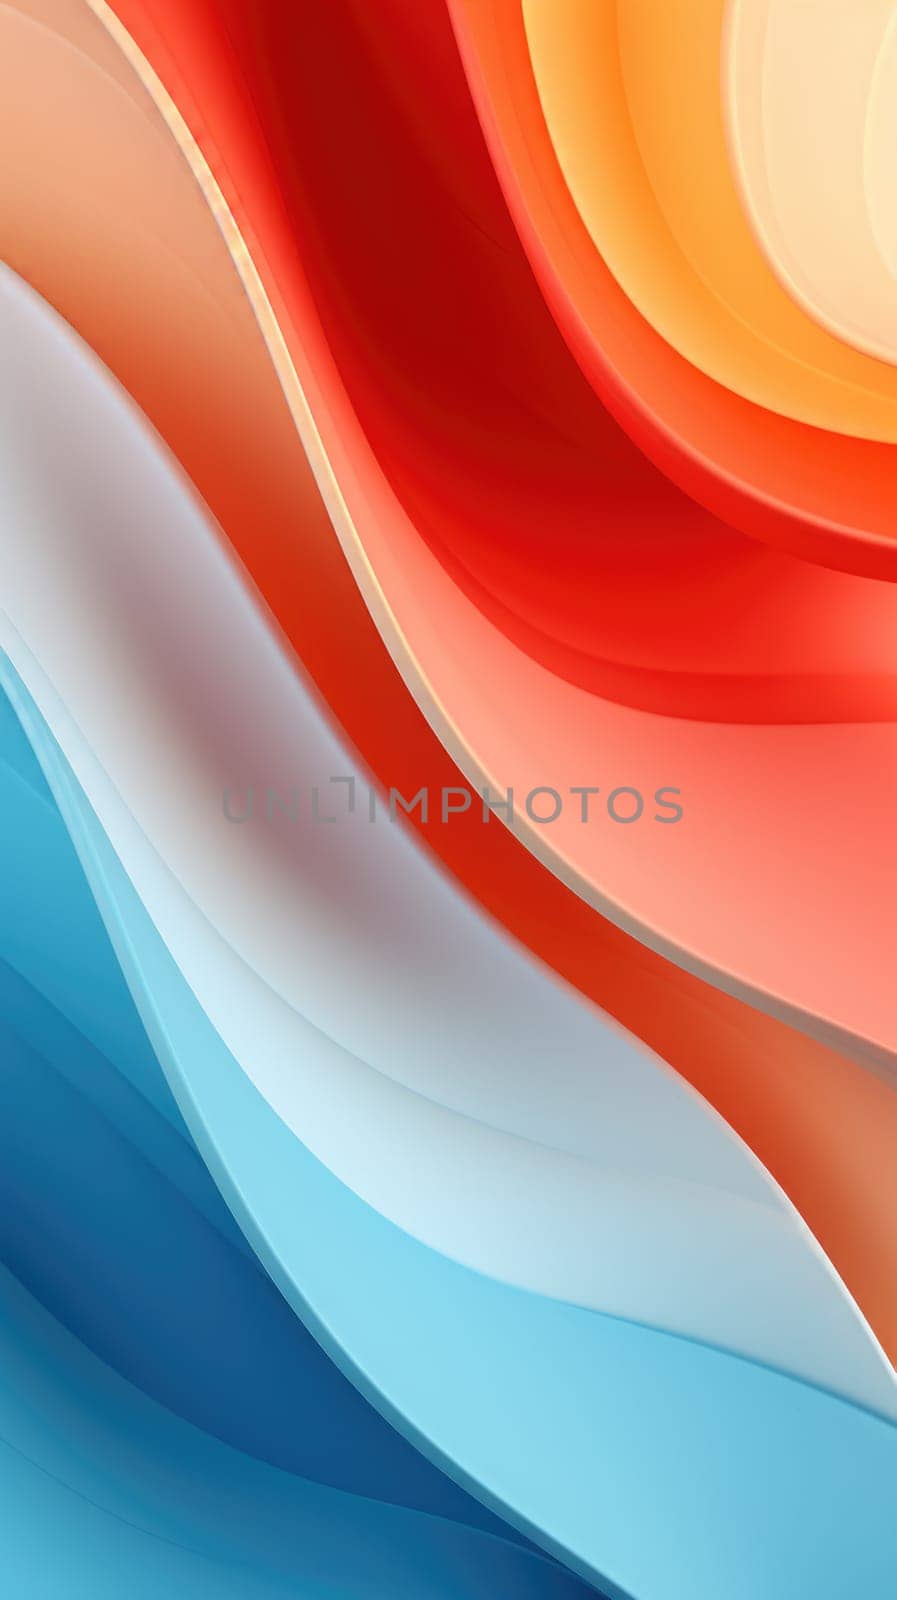 colorful digital wave gradient color background, ai by rachellaiyl